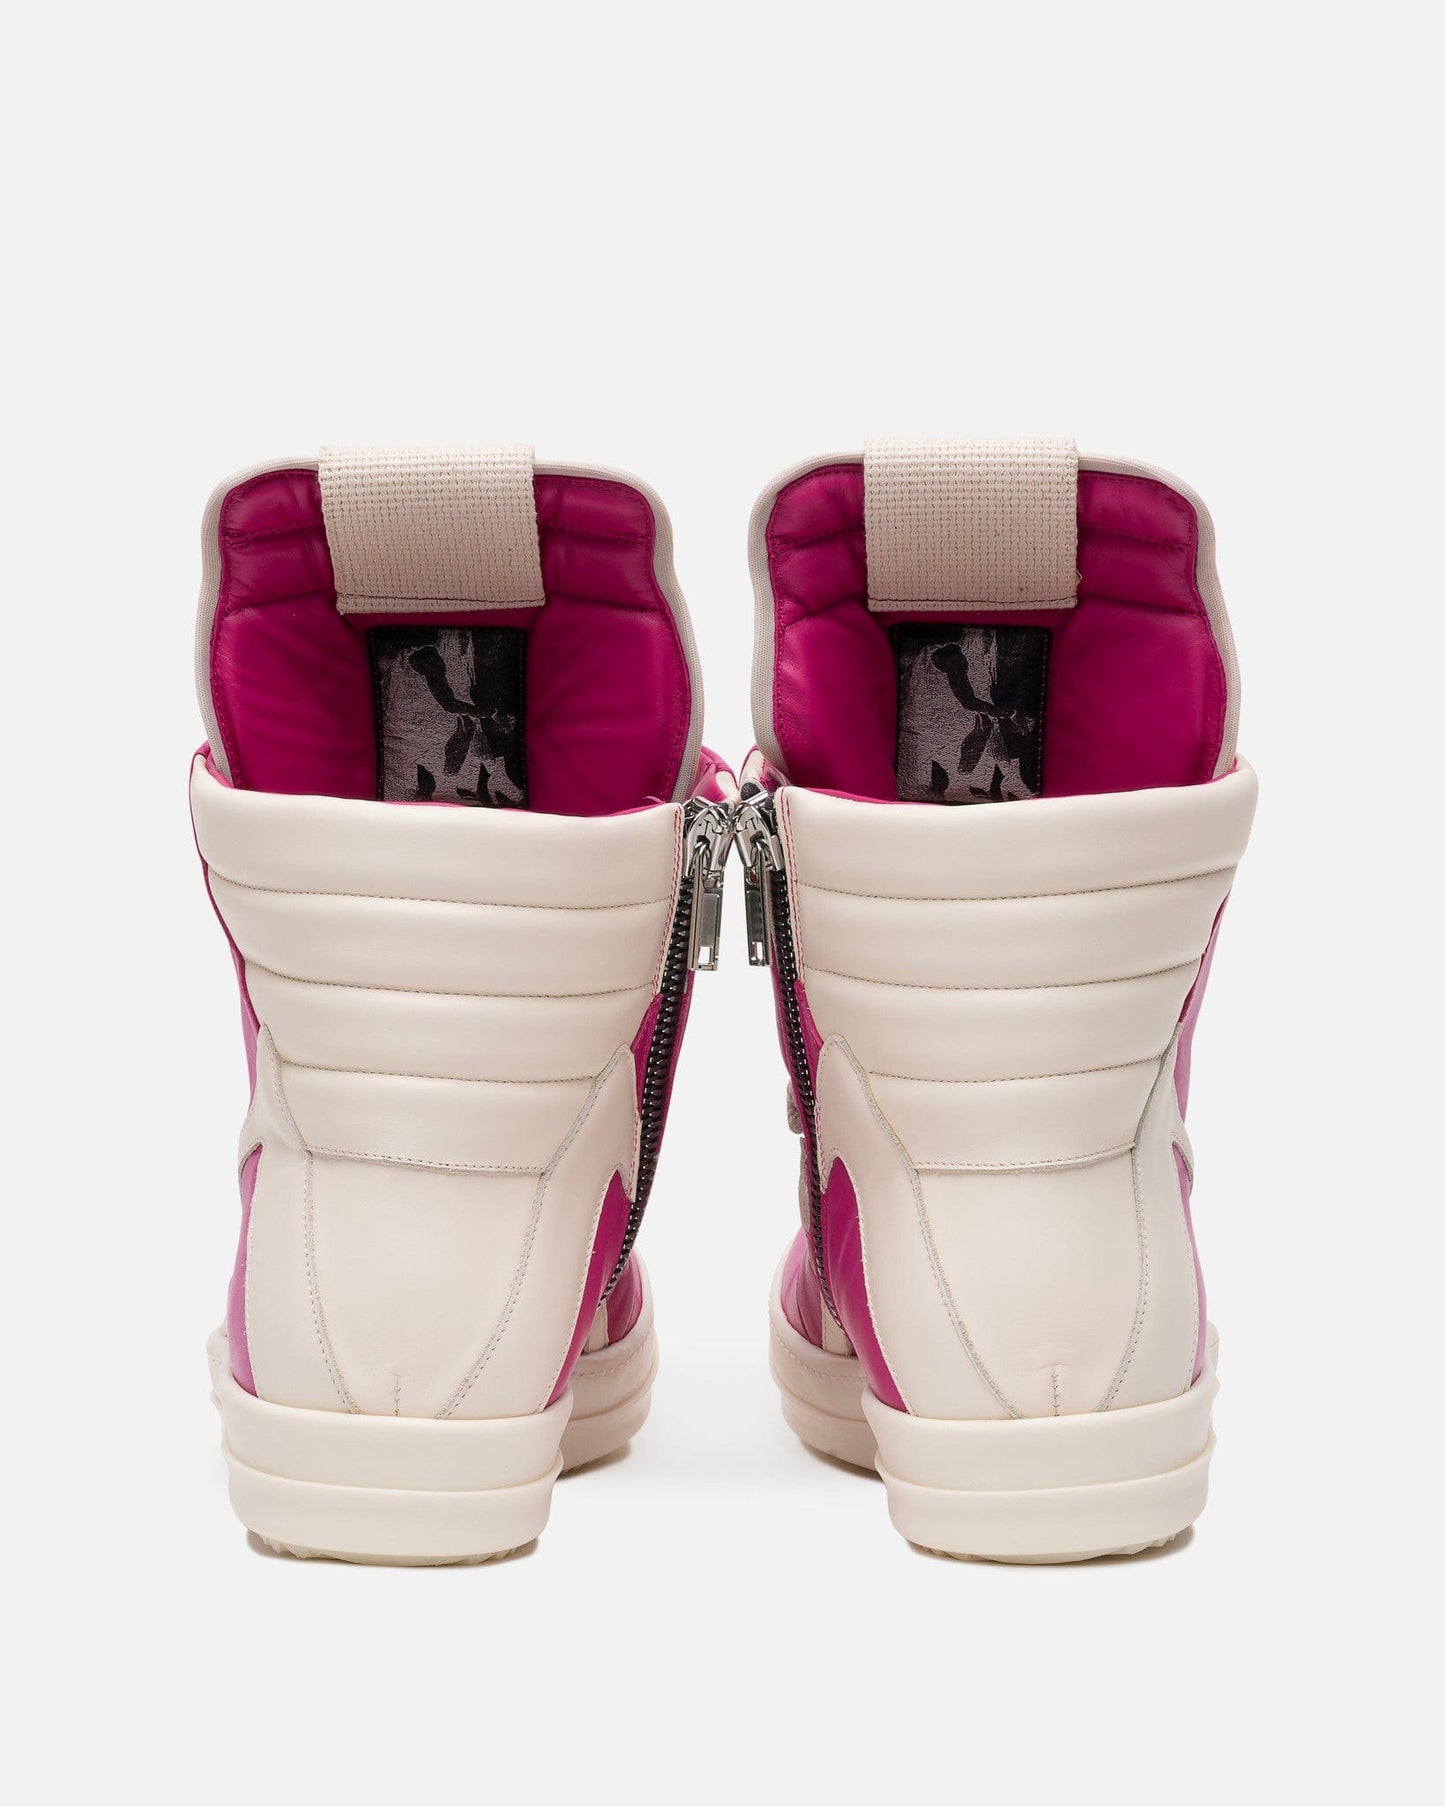 Rick Owens Men's Sneakers Wide Lace Geobasket in Hot Pink/Milk